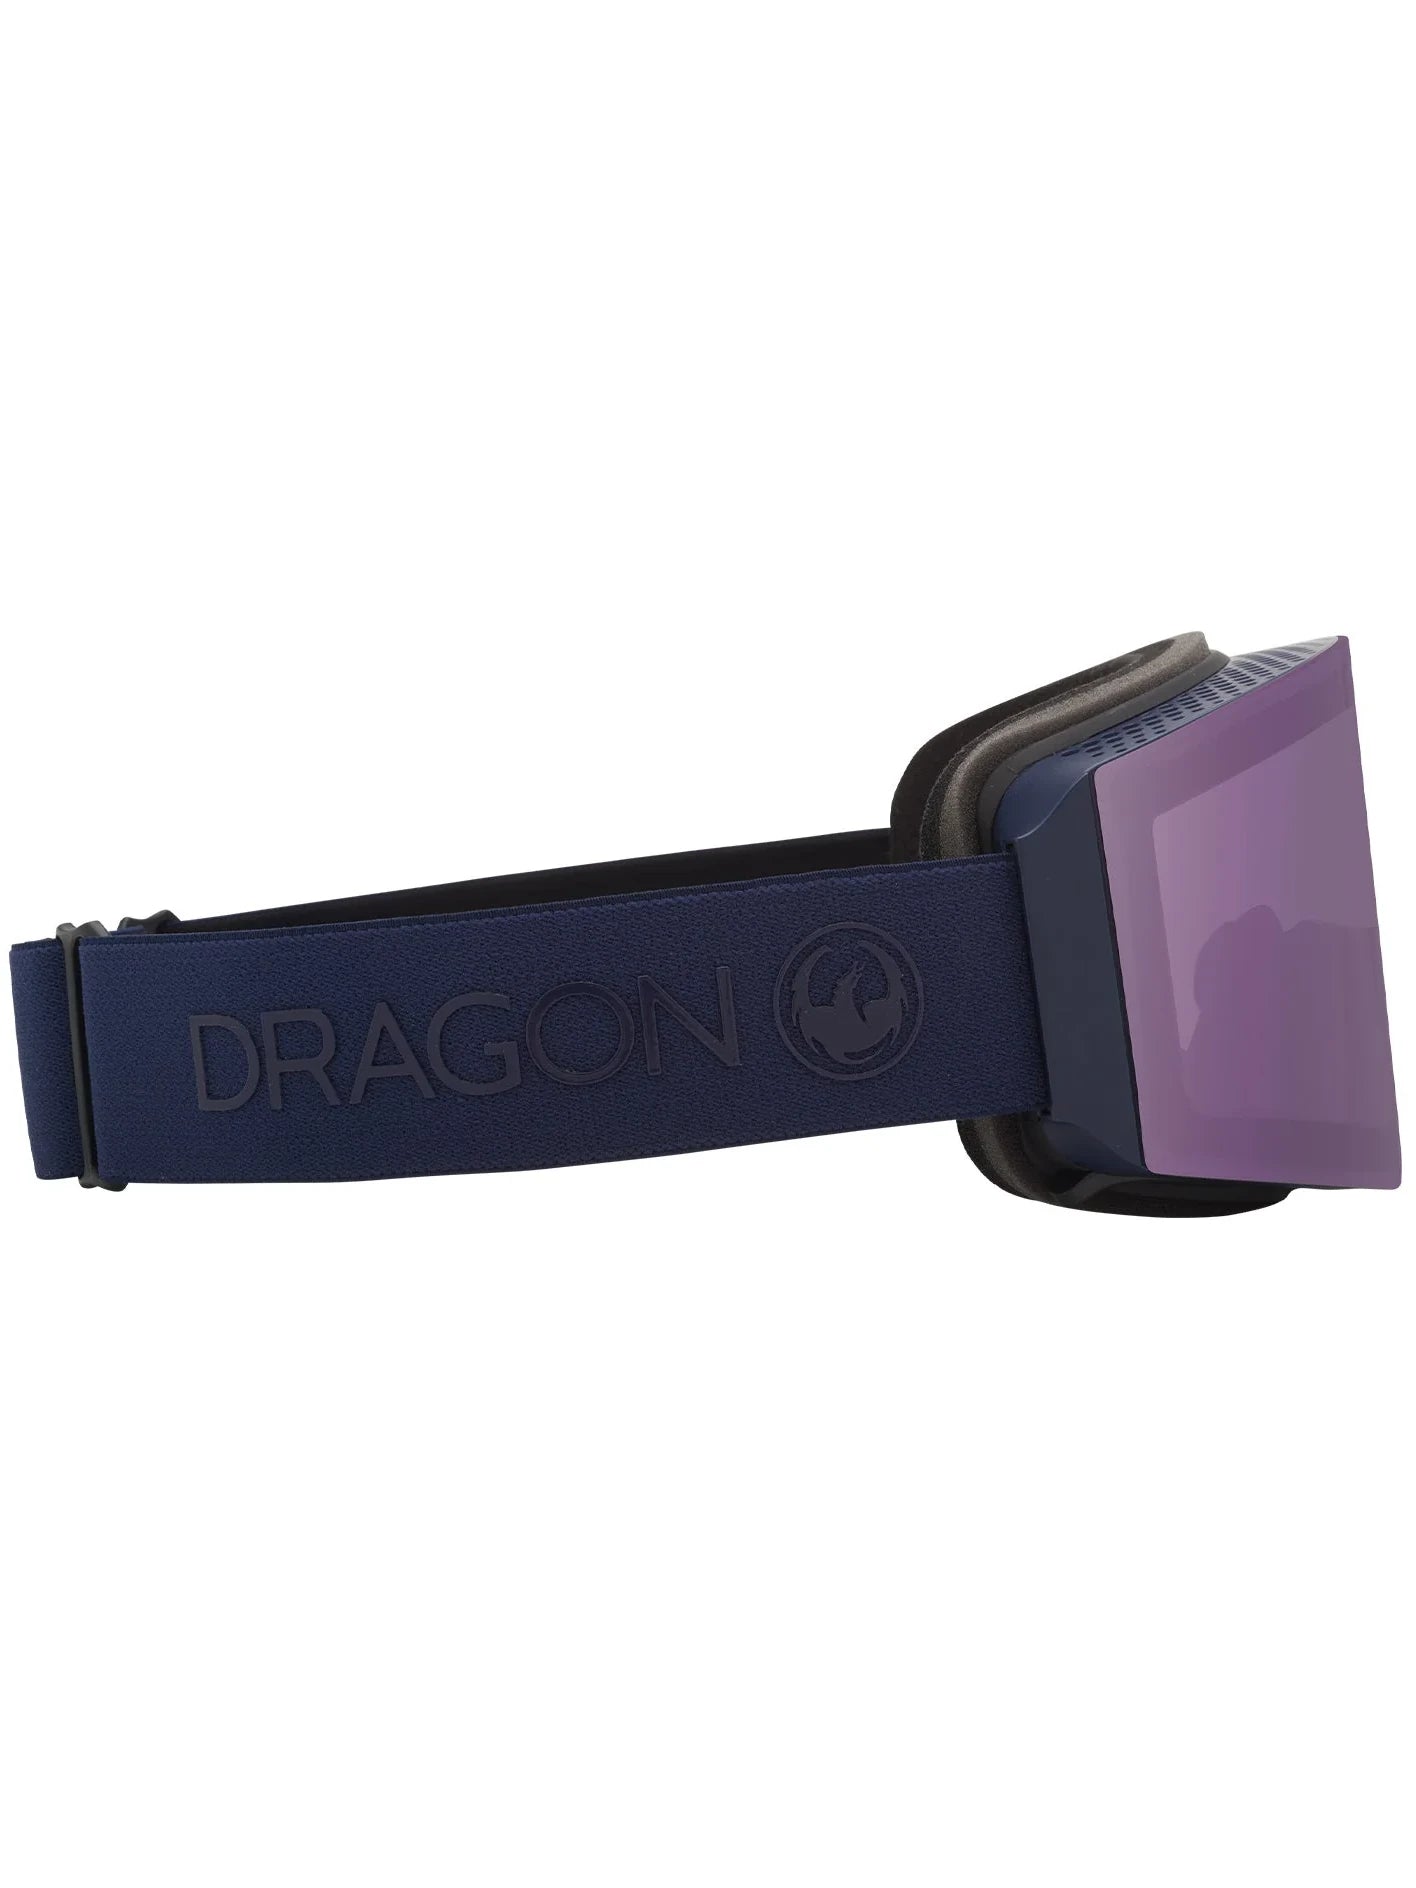 Dragon RVX MAG OTG - Shadow with Lumalens Violet & Lumalens Midnight Lens | Dragon | Gafas de snowboard | Snowboard Shop | surfdevils.com